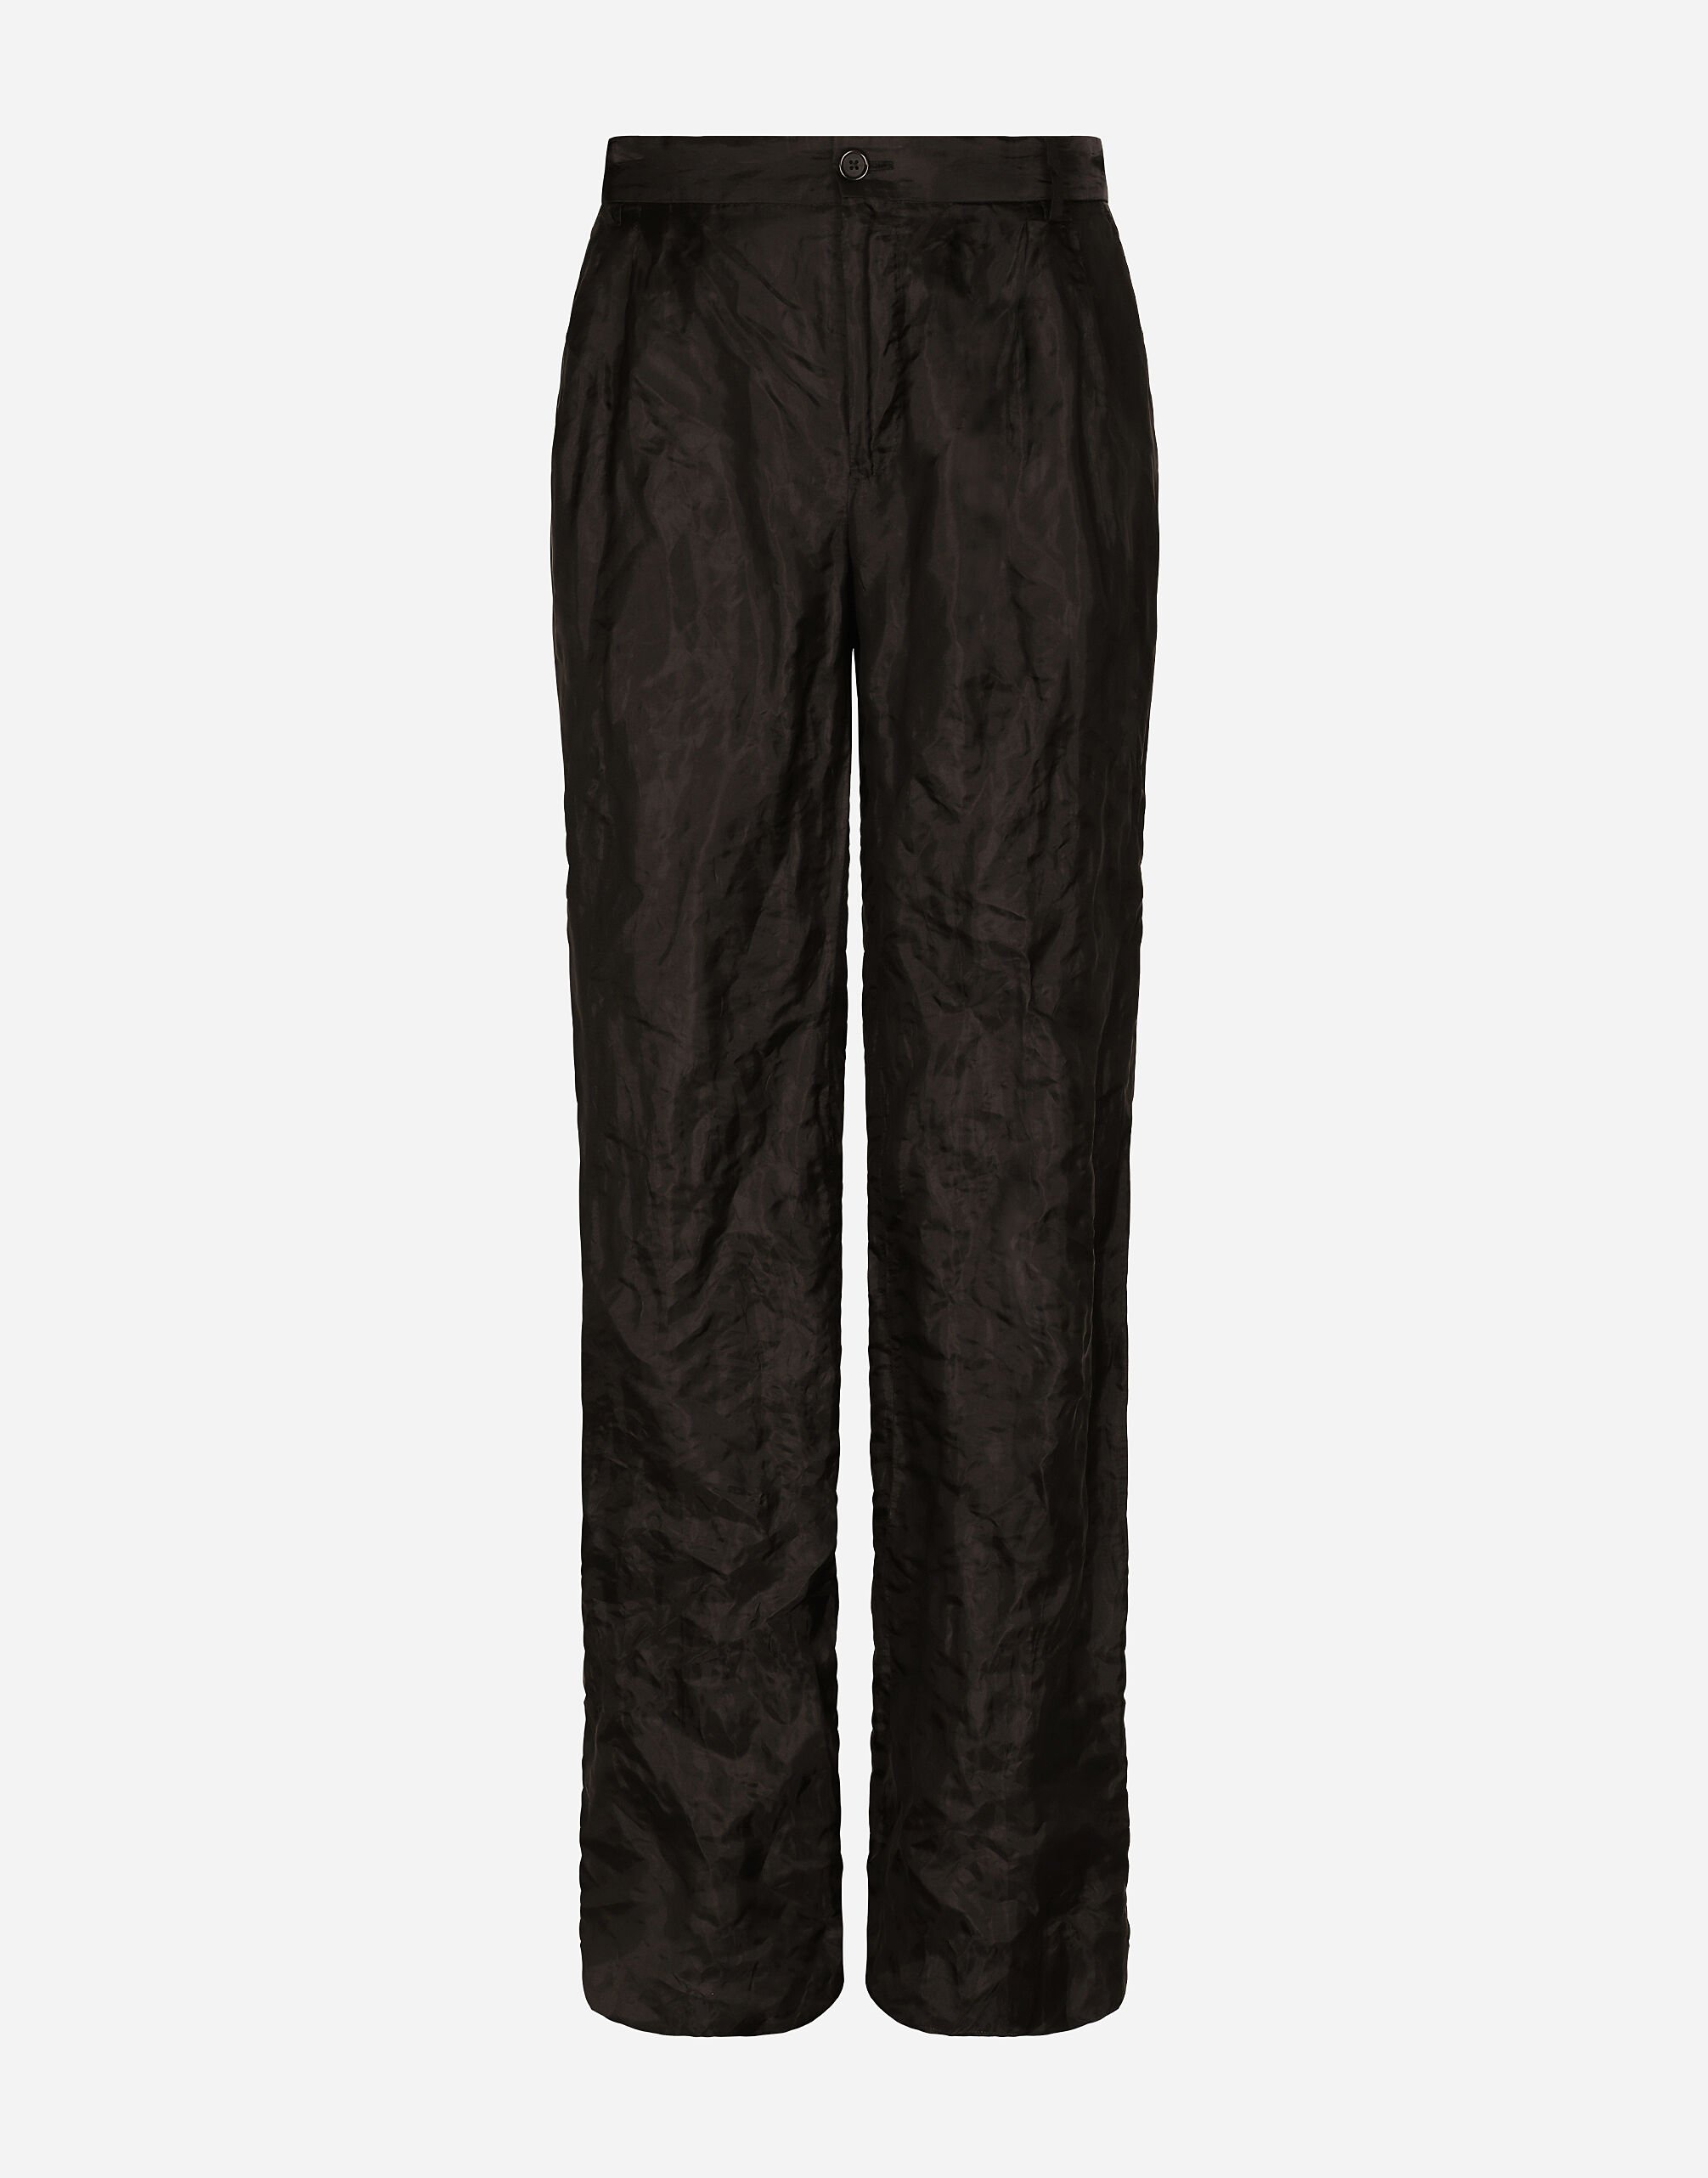 Dolce & Gabbana سروال محبوك بساق مستقيمة من نسيج تقني ممعدن وحرير متعدد الألوان GV1CXTFU4KJ